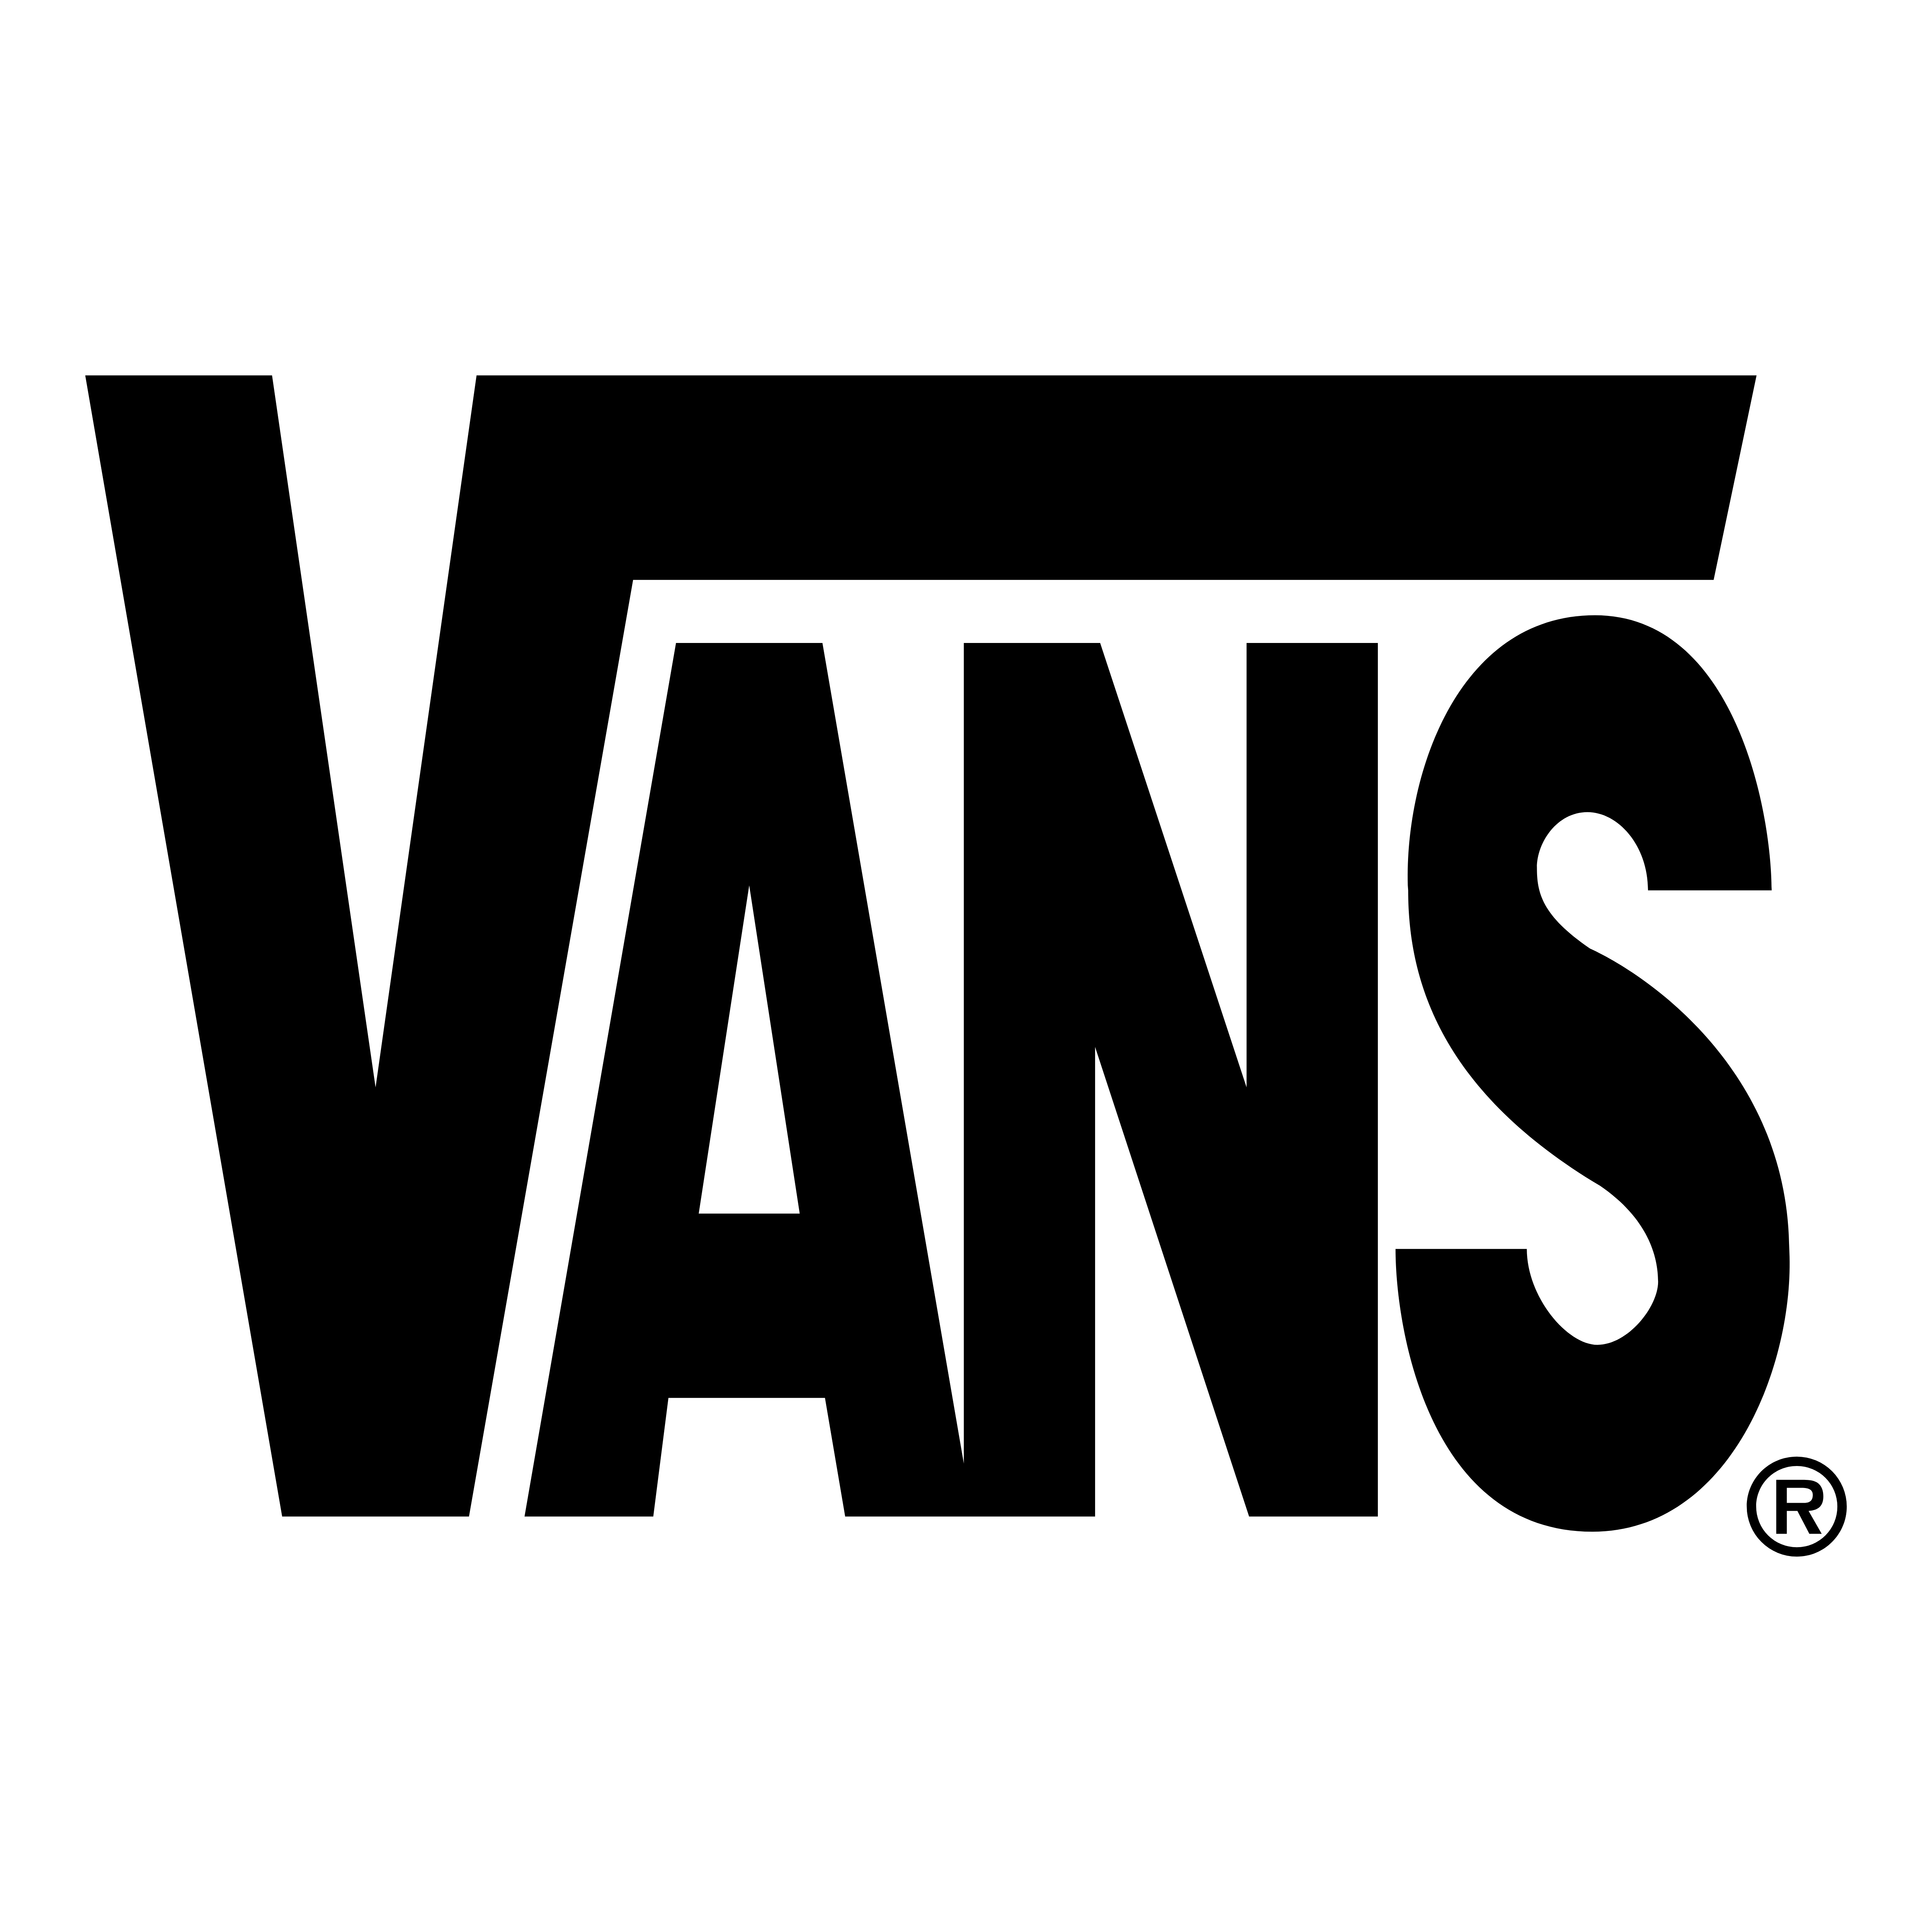 black vans logo